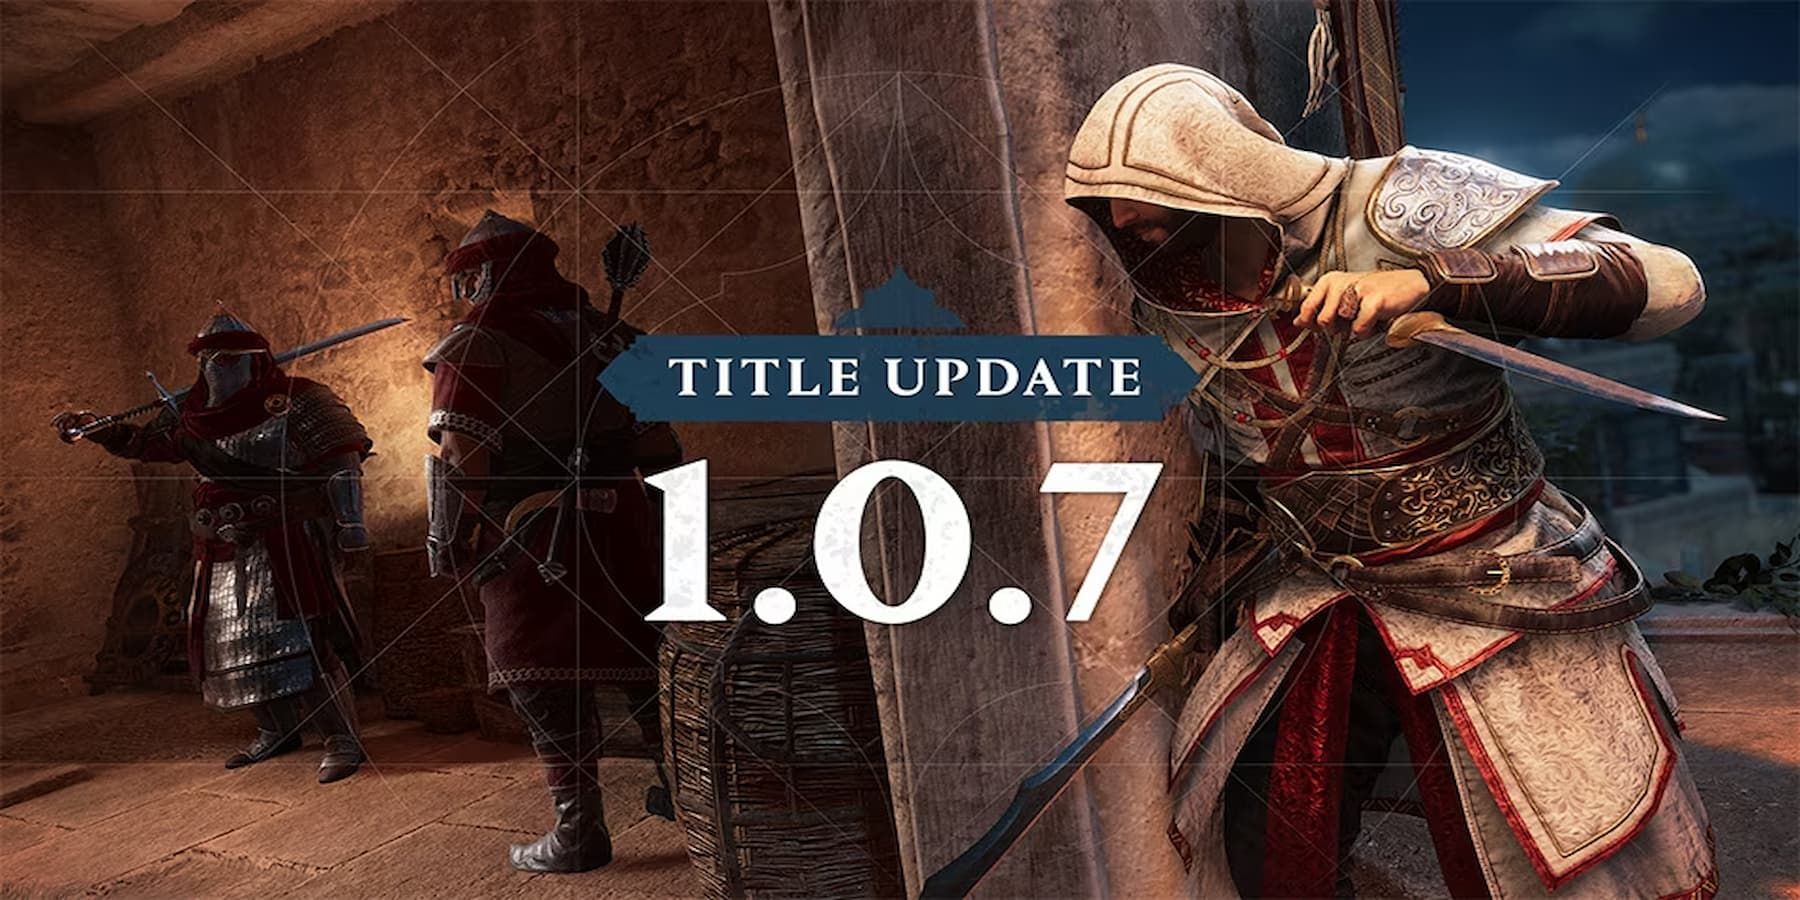 ac mirage title update 1.0.7